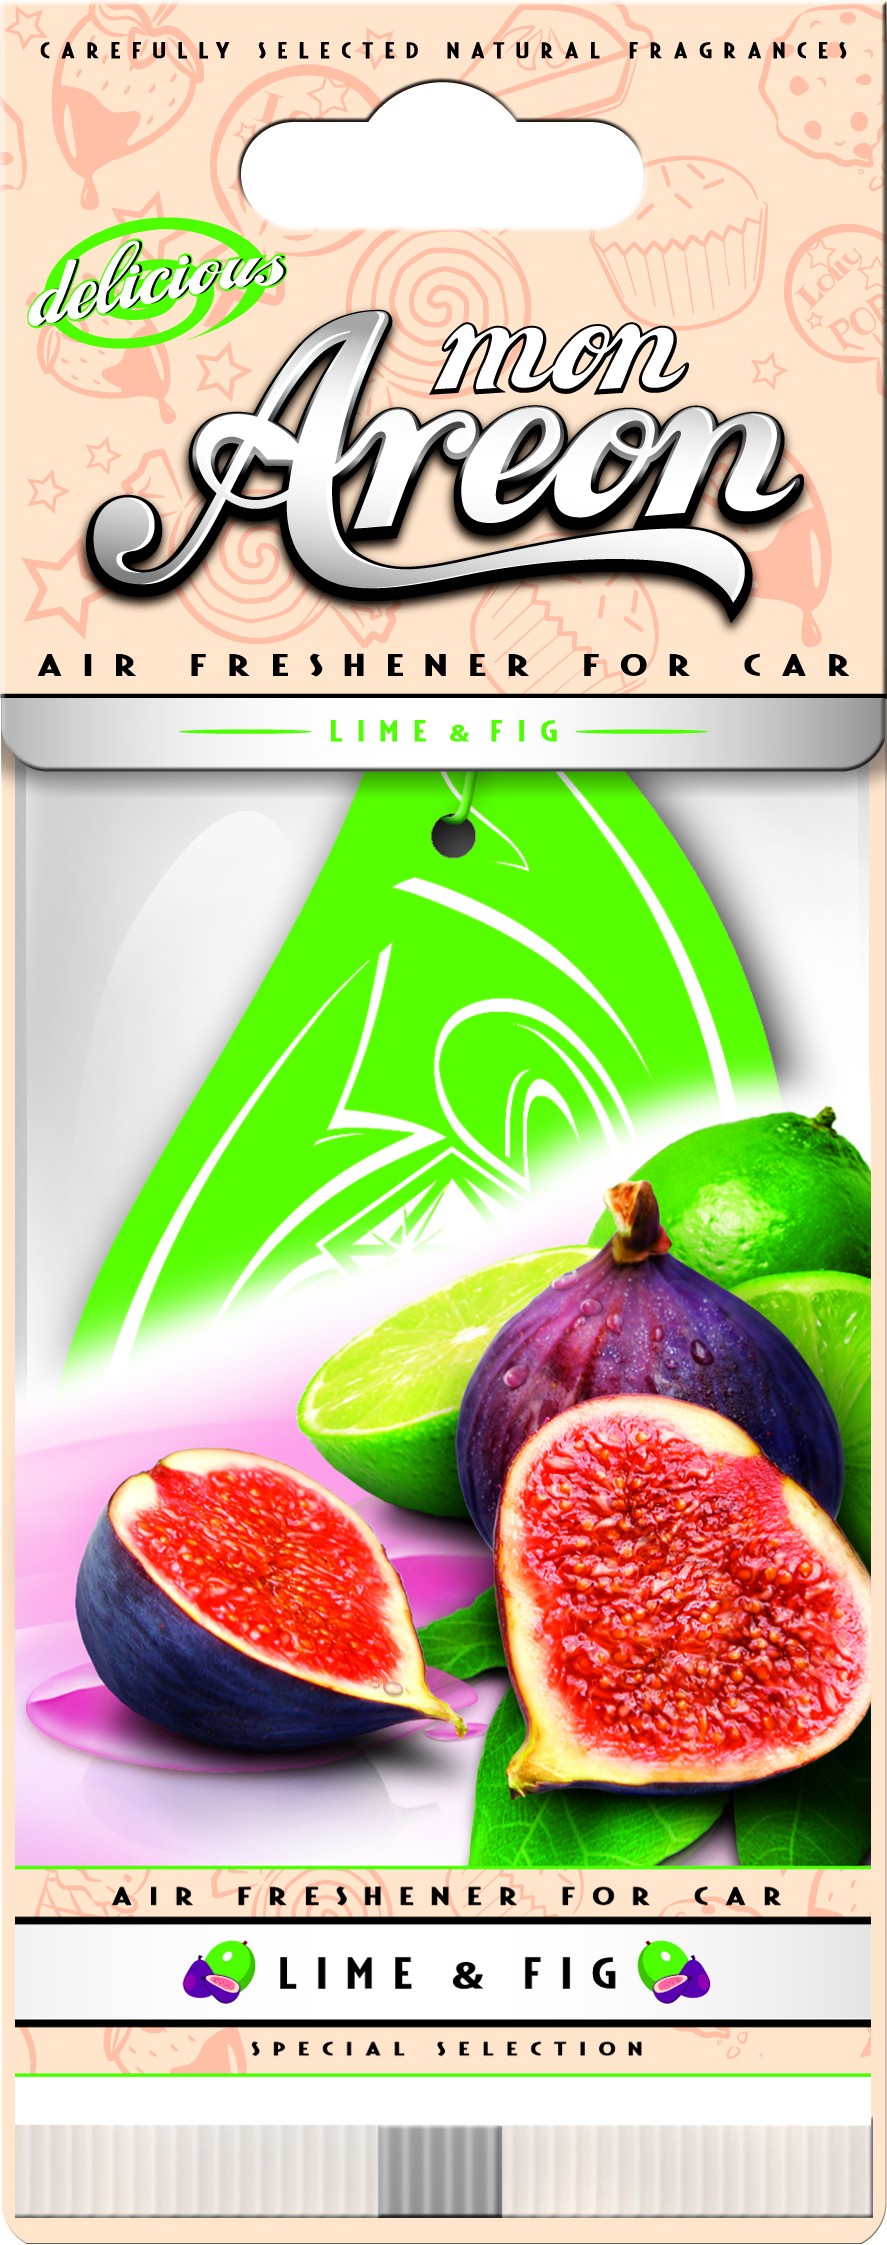 https://cr-lights.de/media/image/d6/02/11/areon-mon-delicious-lime-feige-lufterfrischer-duftbaum-mad06.jpg